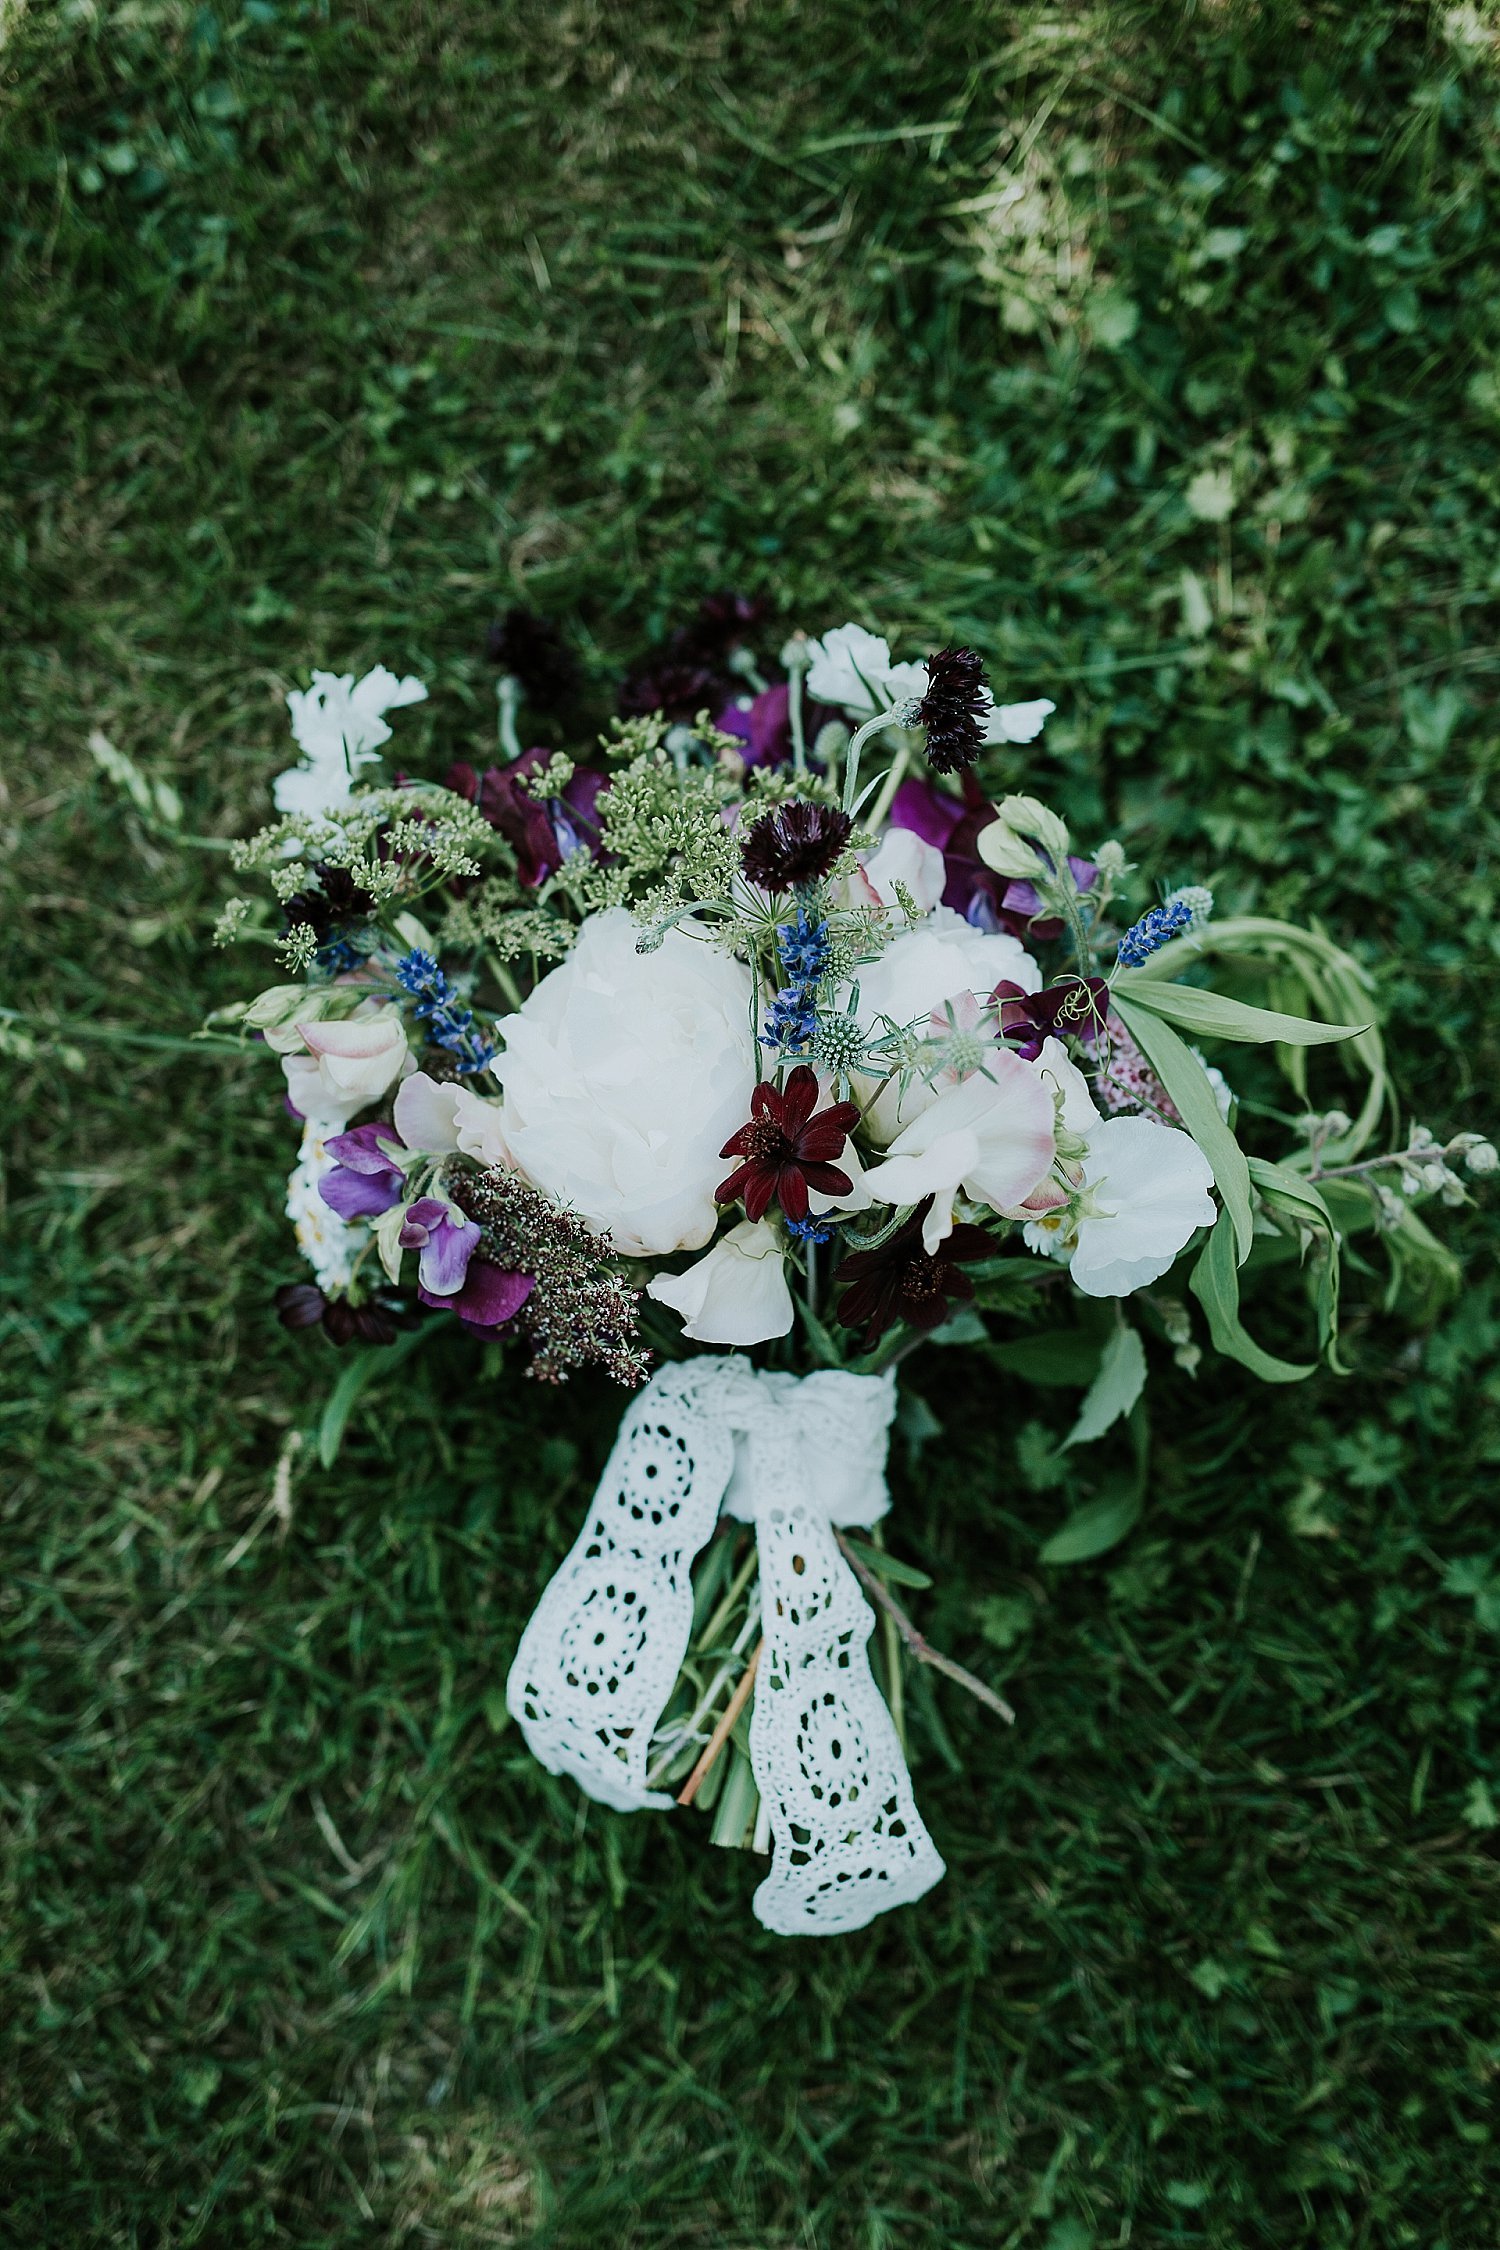 modern country garden style wedding bouquet on grass | Aero Island | Danish Island Weddings | Full service Denmark wedding planners